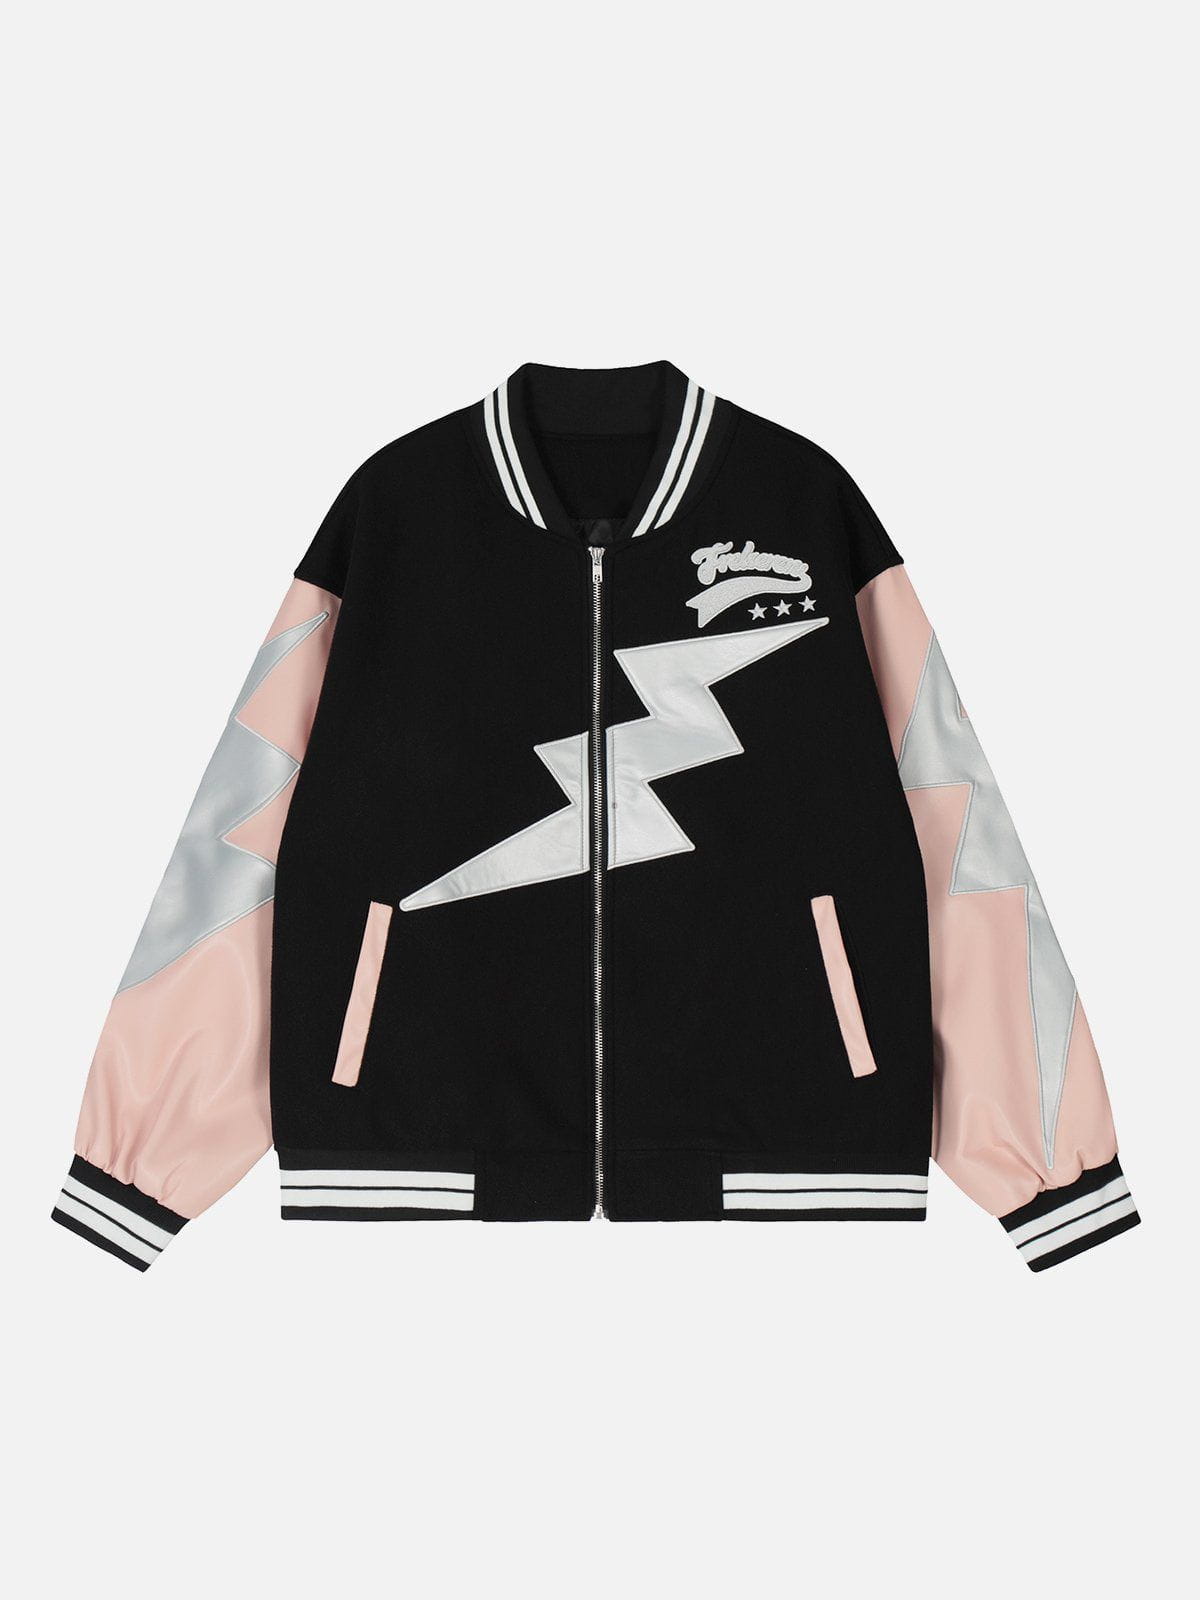 Majesda® - Patchwork Lightning Varsity Jacket outfit ideas, streetwear fashion - majesda.com